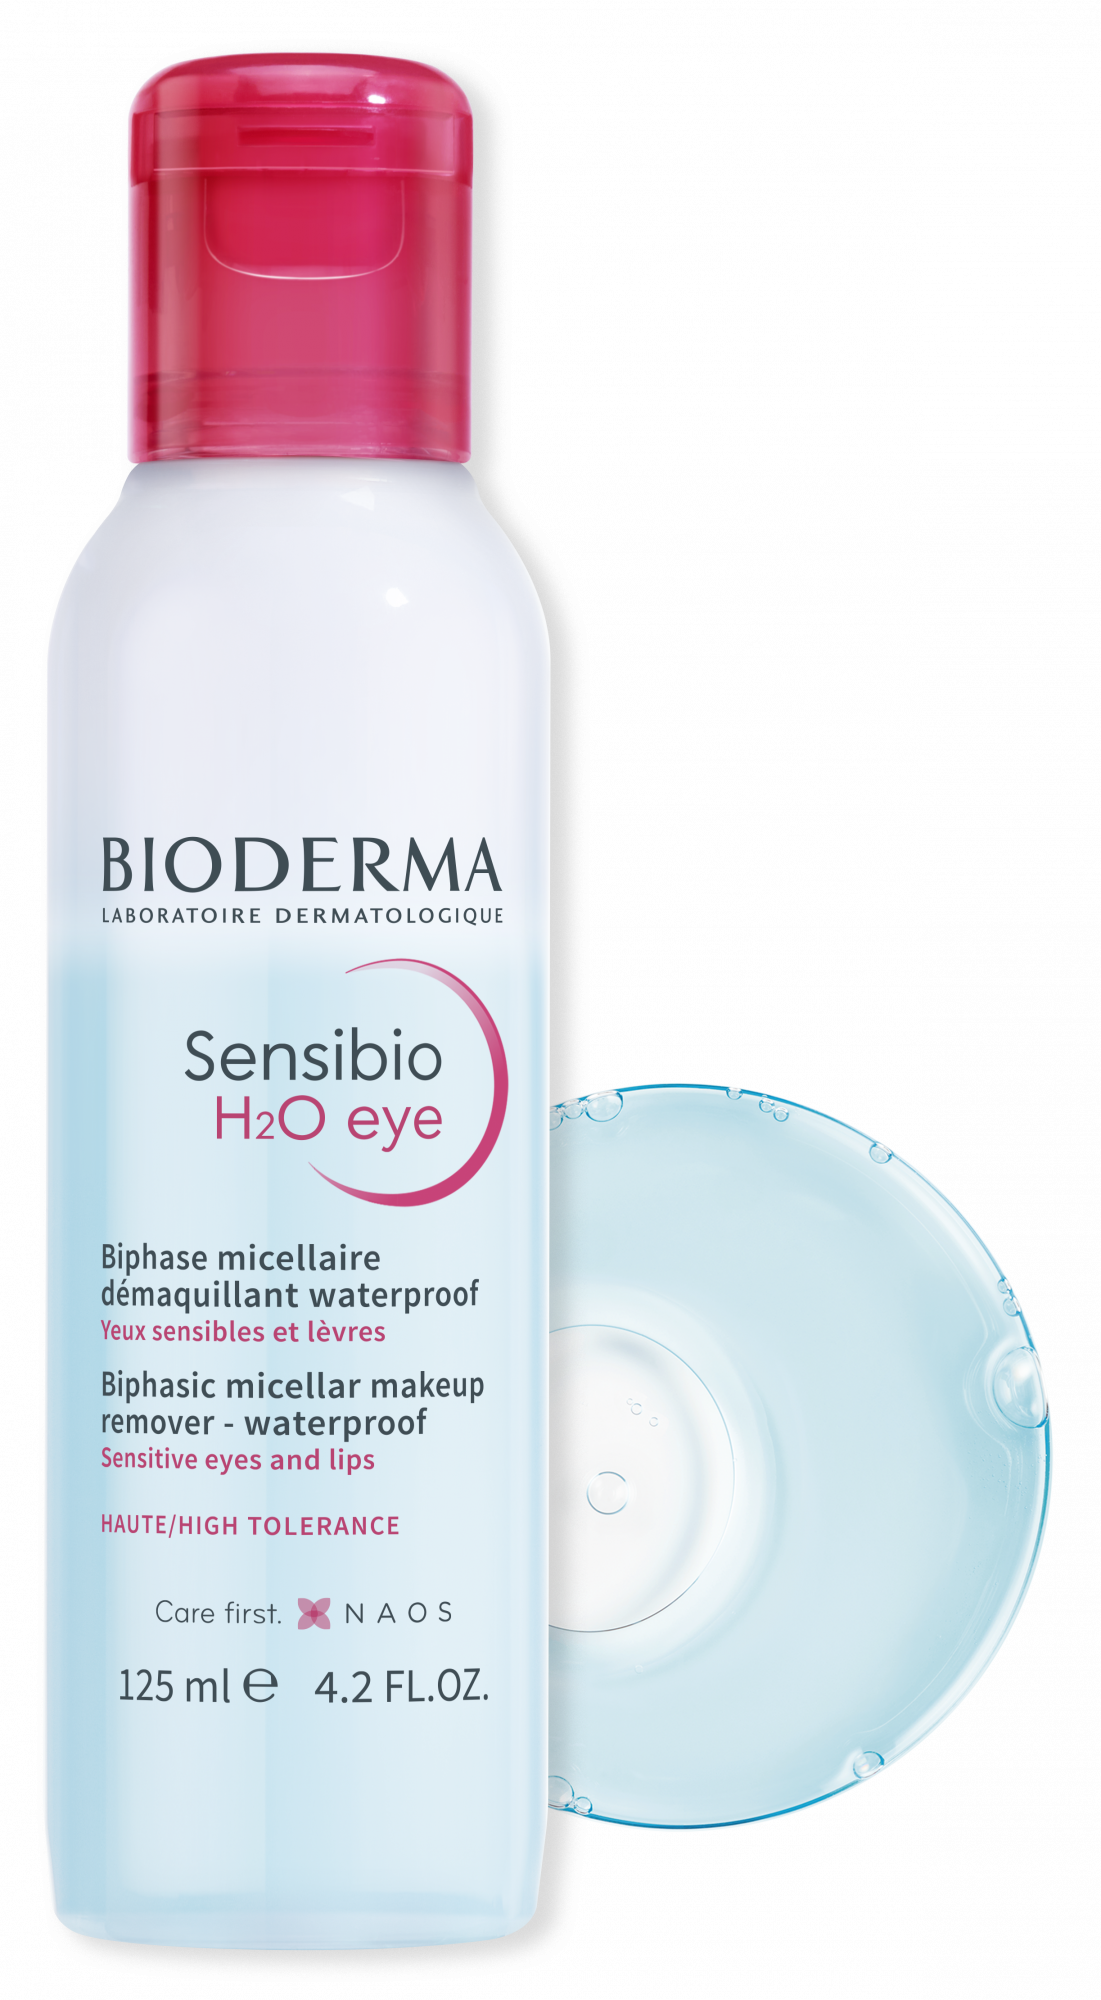 Bioderma Sensibio H2O Eye Biphase Micellar Makeup Remover Review